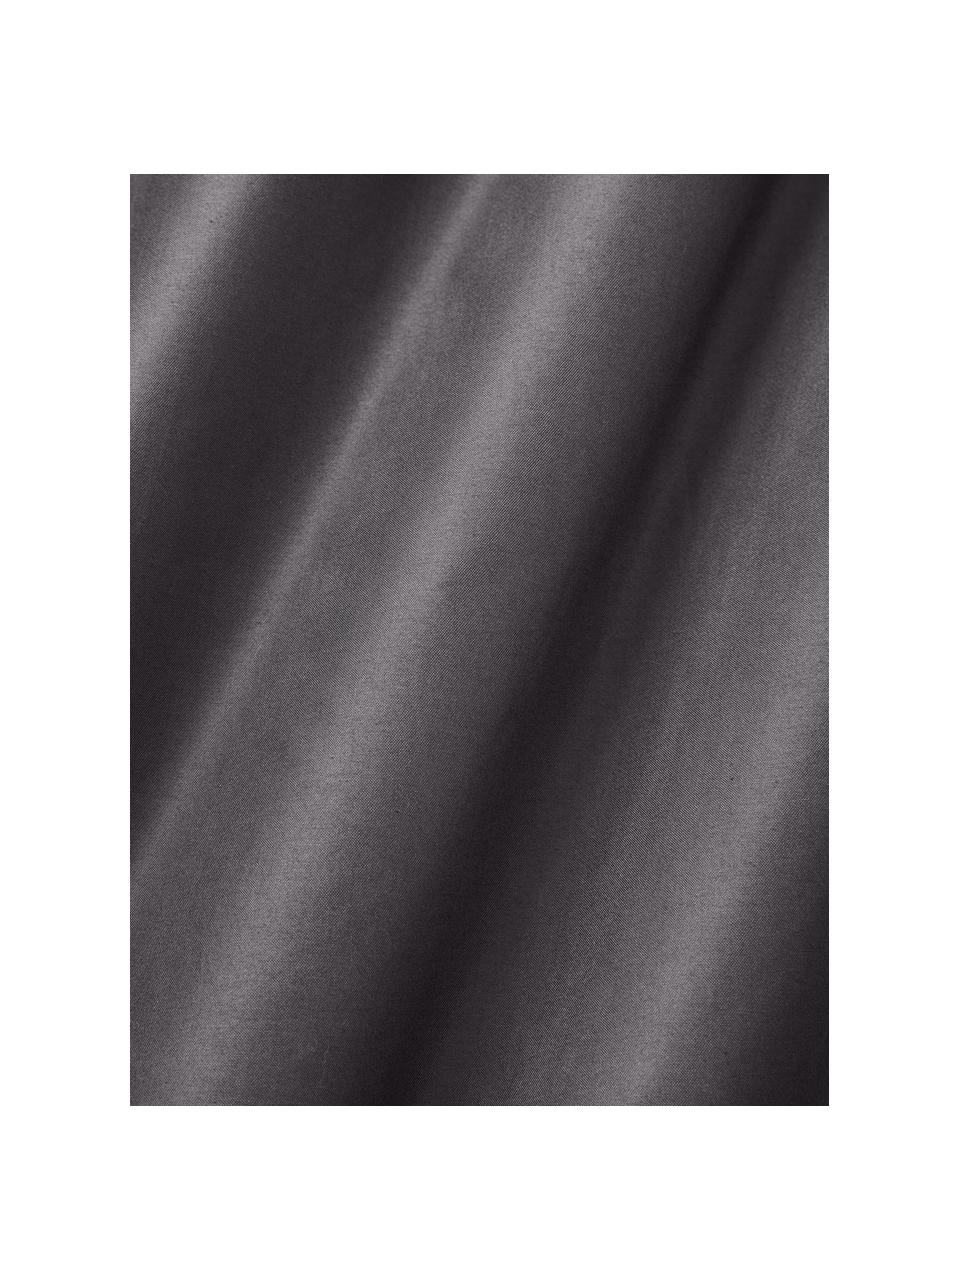 Sábana bajera de satén Premium, Gris oscuro, Cama 90 cm (90 x 200 x 35 cm)